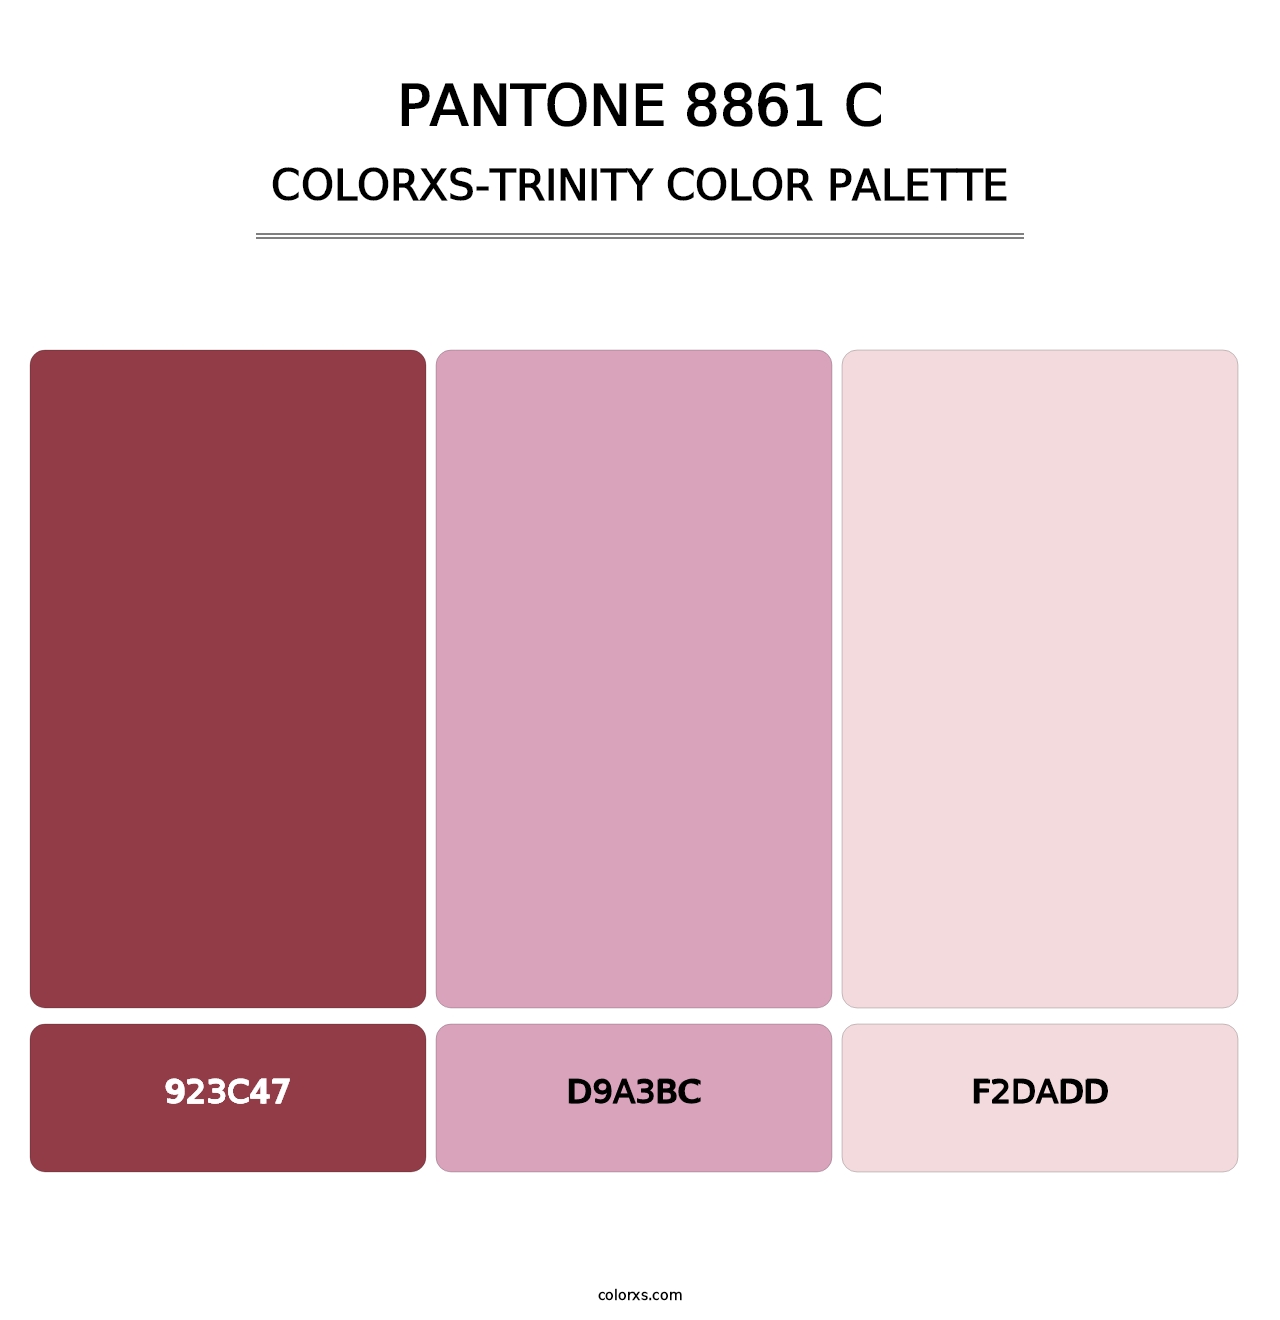 PANTONE 8861 C - Colorxs Trinity Palette